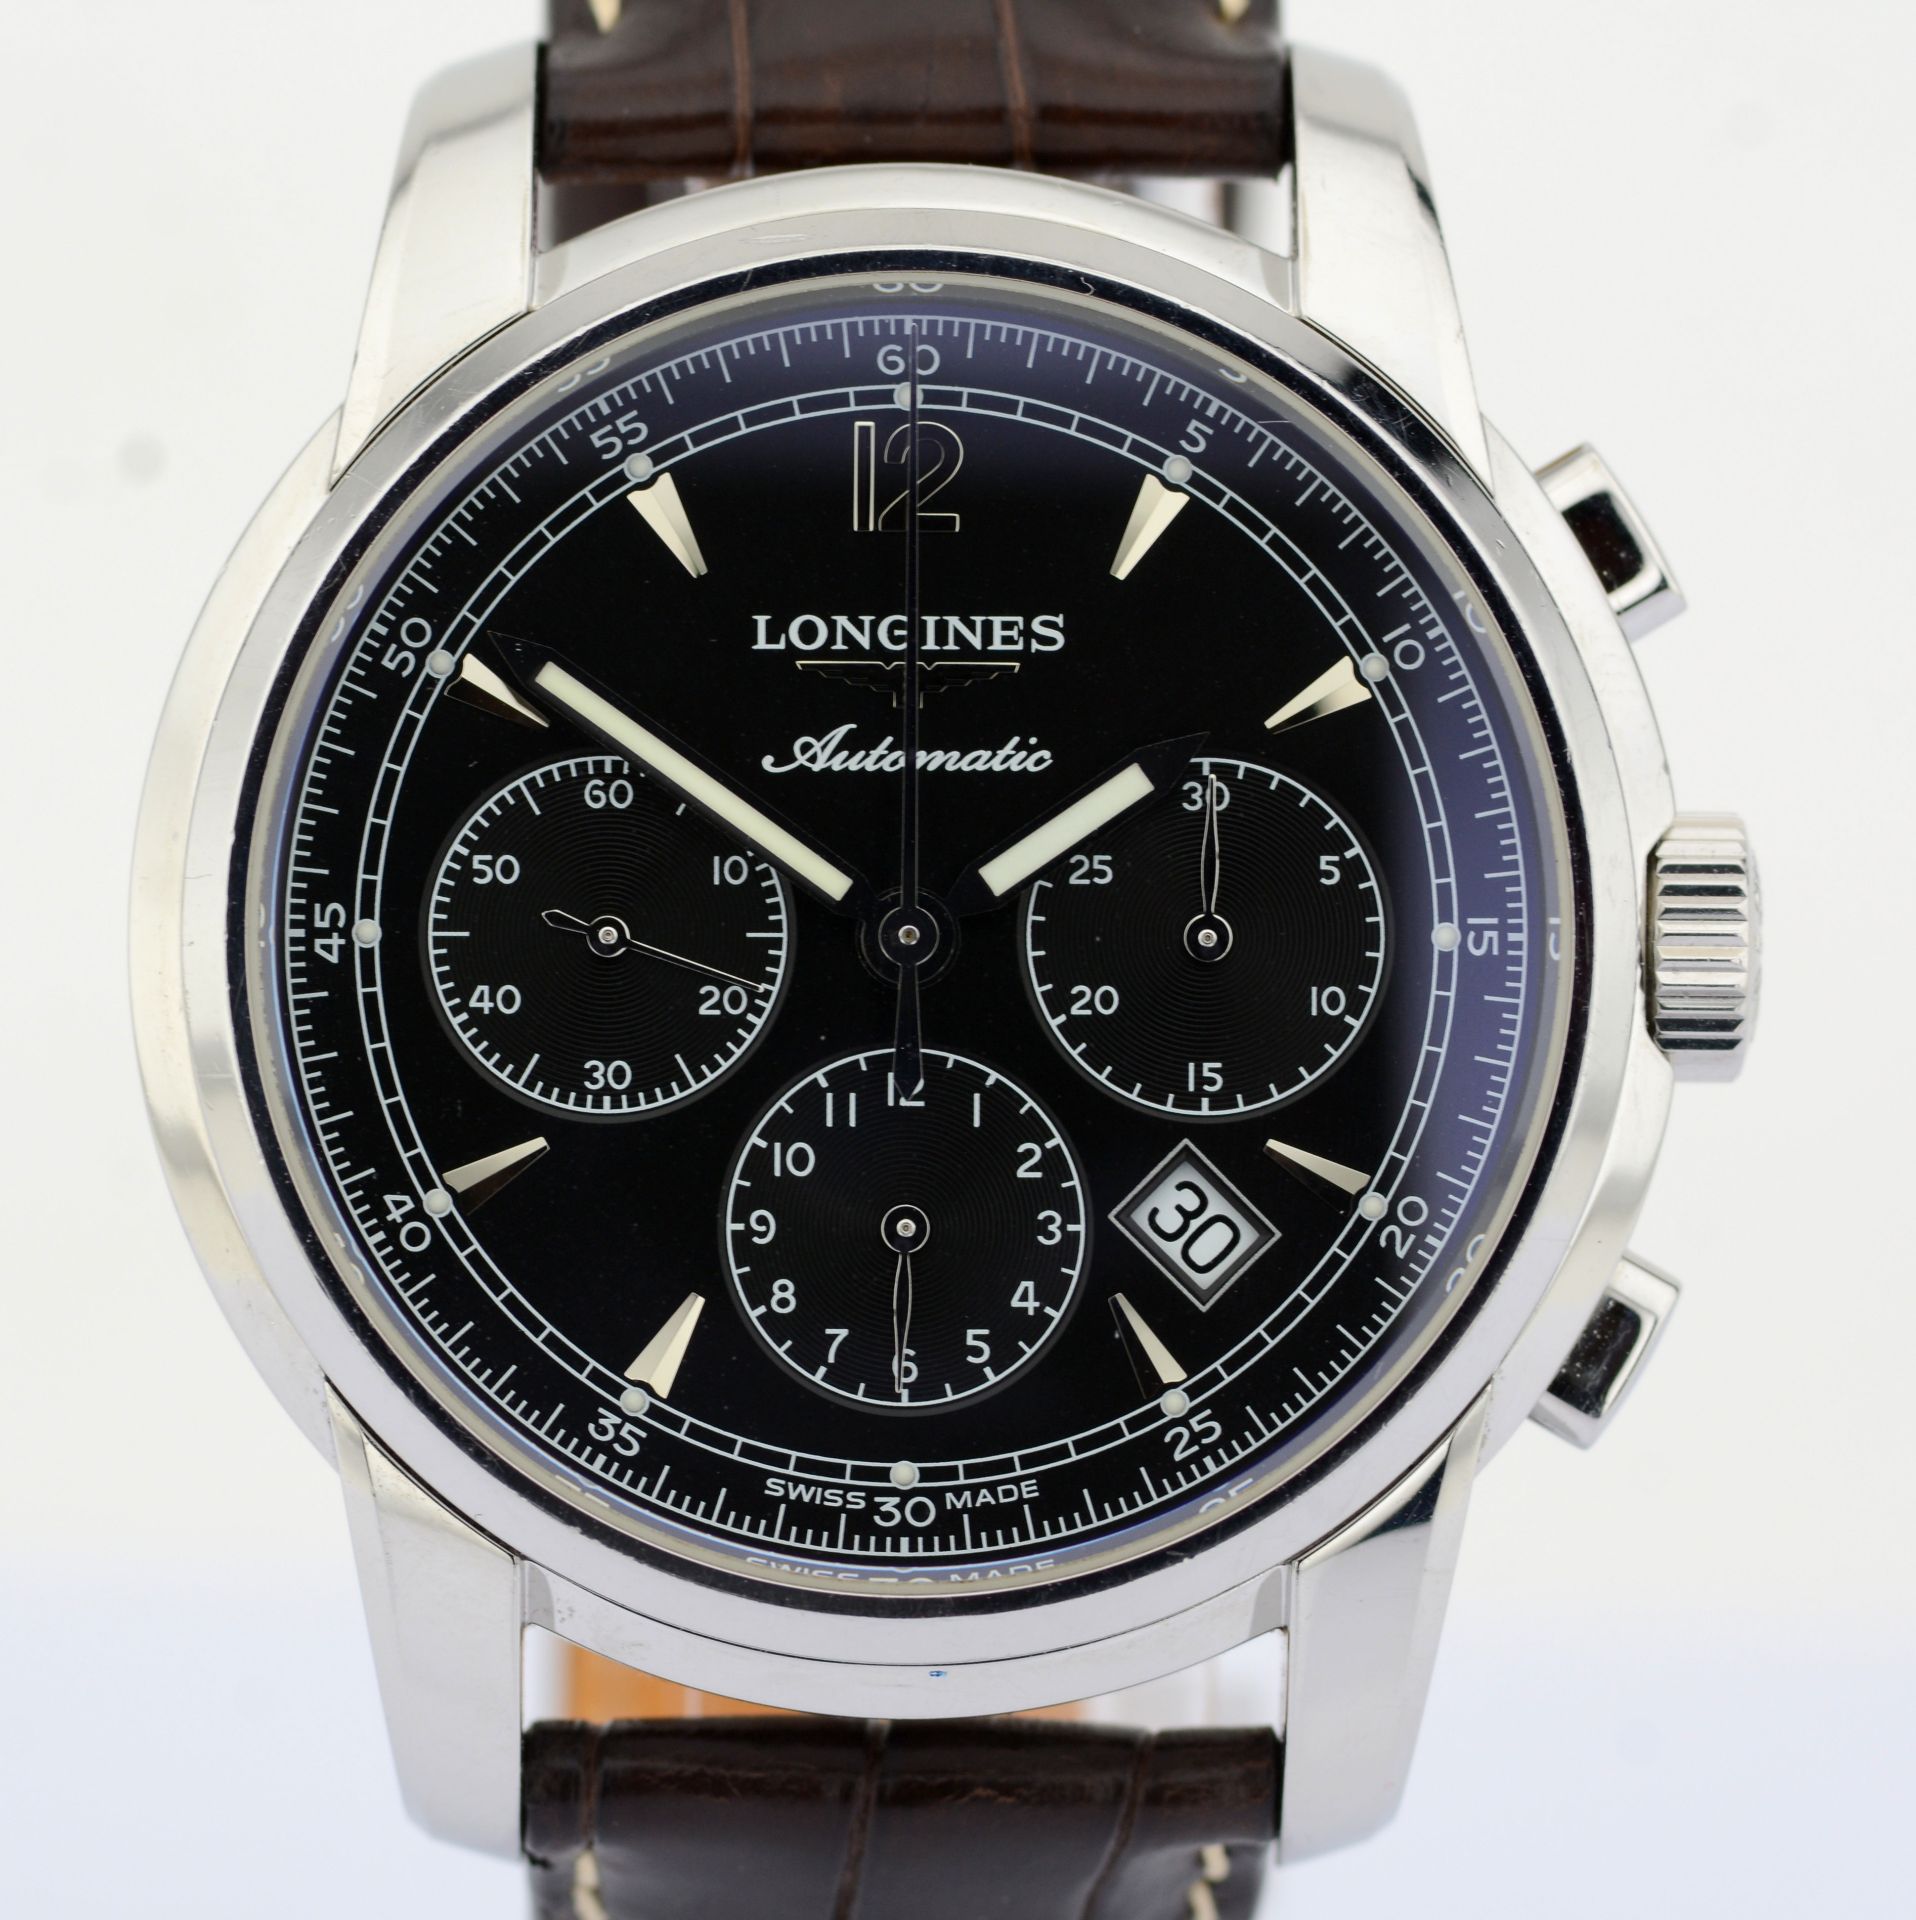 Longines / L2.784.4 Saint-Imier Collection Chronograph Automatic - Gentlmen's Steel Wrist Watch